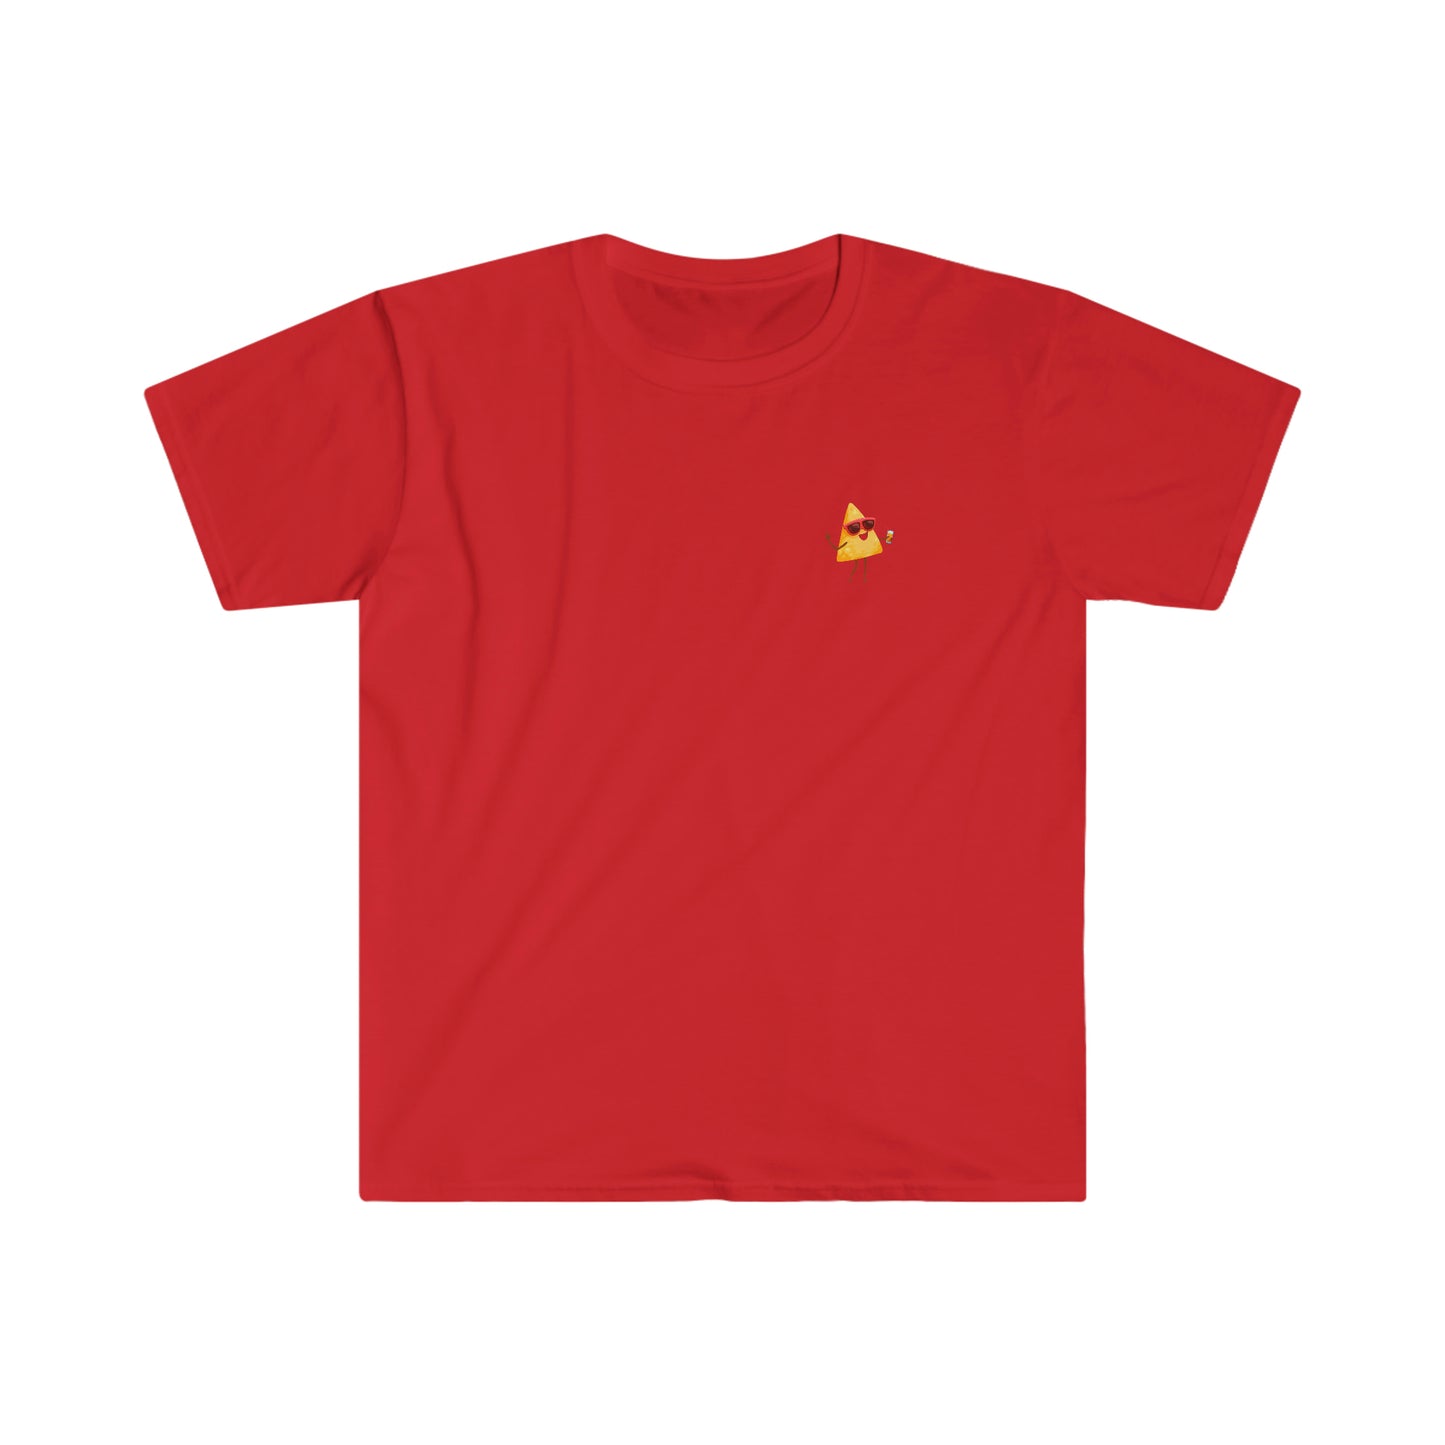 ‘Yo! It’s NACHO Business!’ Printed Front & Back. Unisex Softstyle T-Shirt